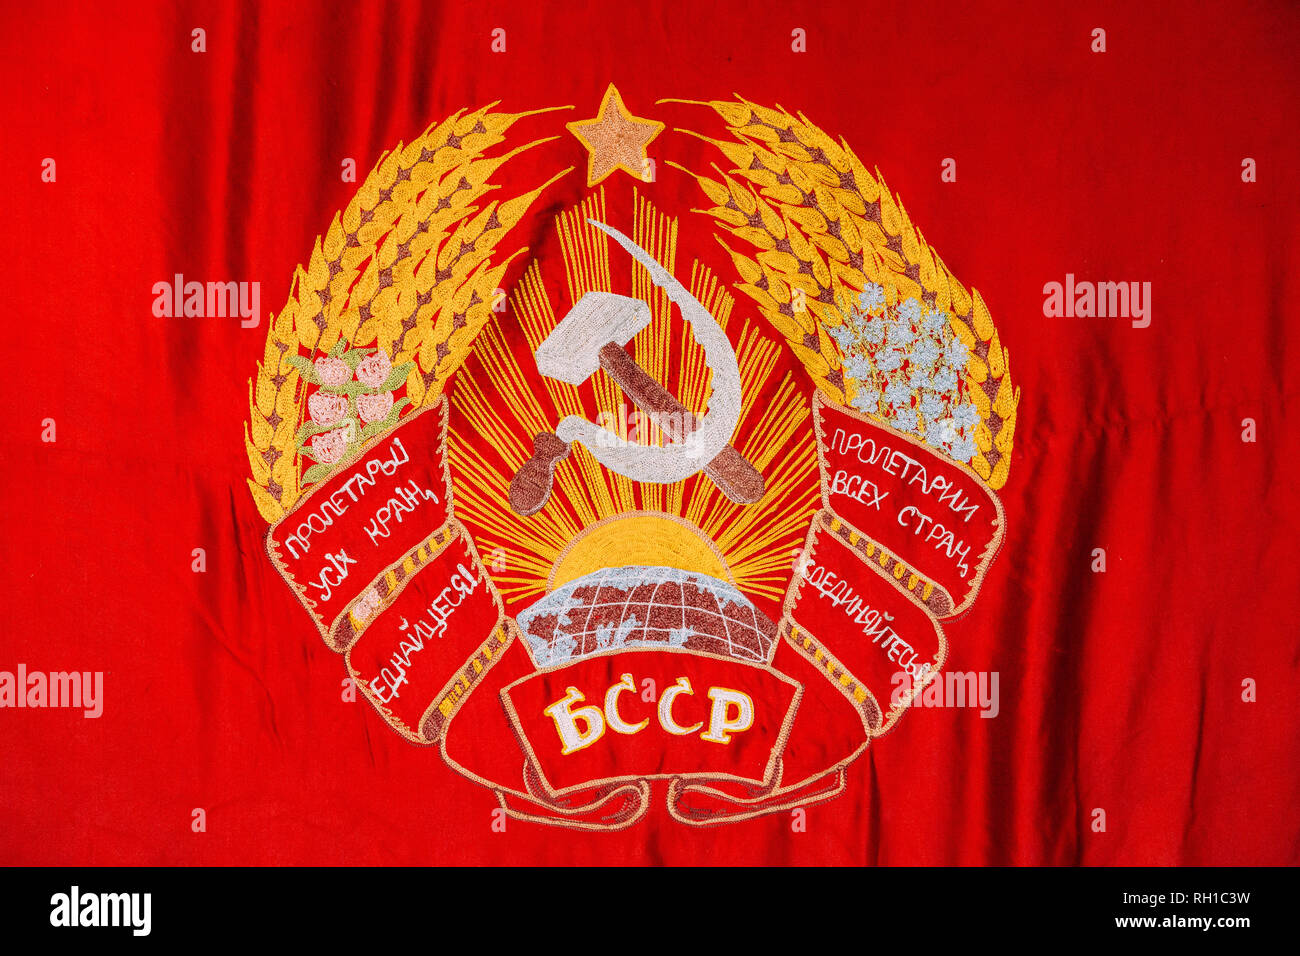 Emblem Of Byelorussian Soviet Socialist Republic On Soviet Byelorussian SSR With Political Slogan 'Workers Of World, Unite!'. Stock Photo